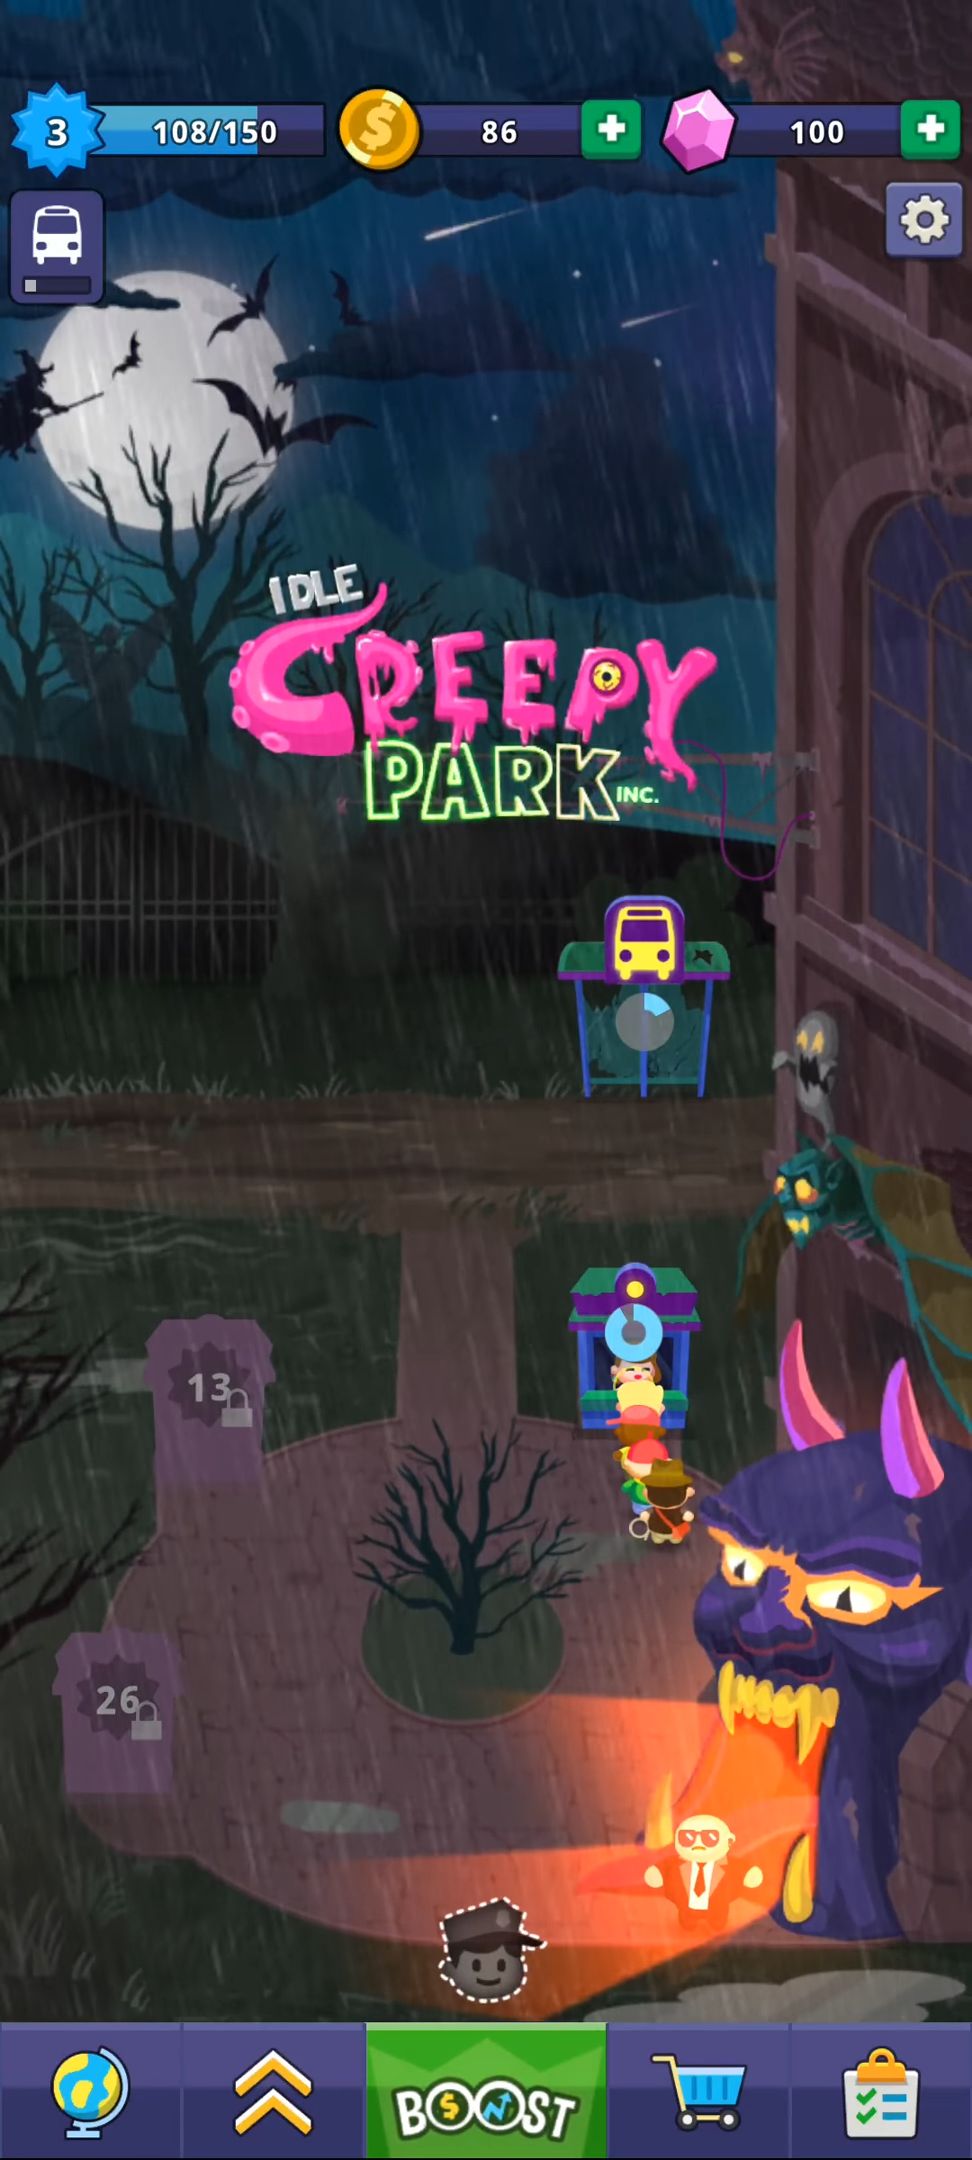 Scarica Idle Creepy Park Inc. gratis per Android.